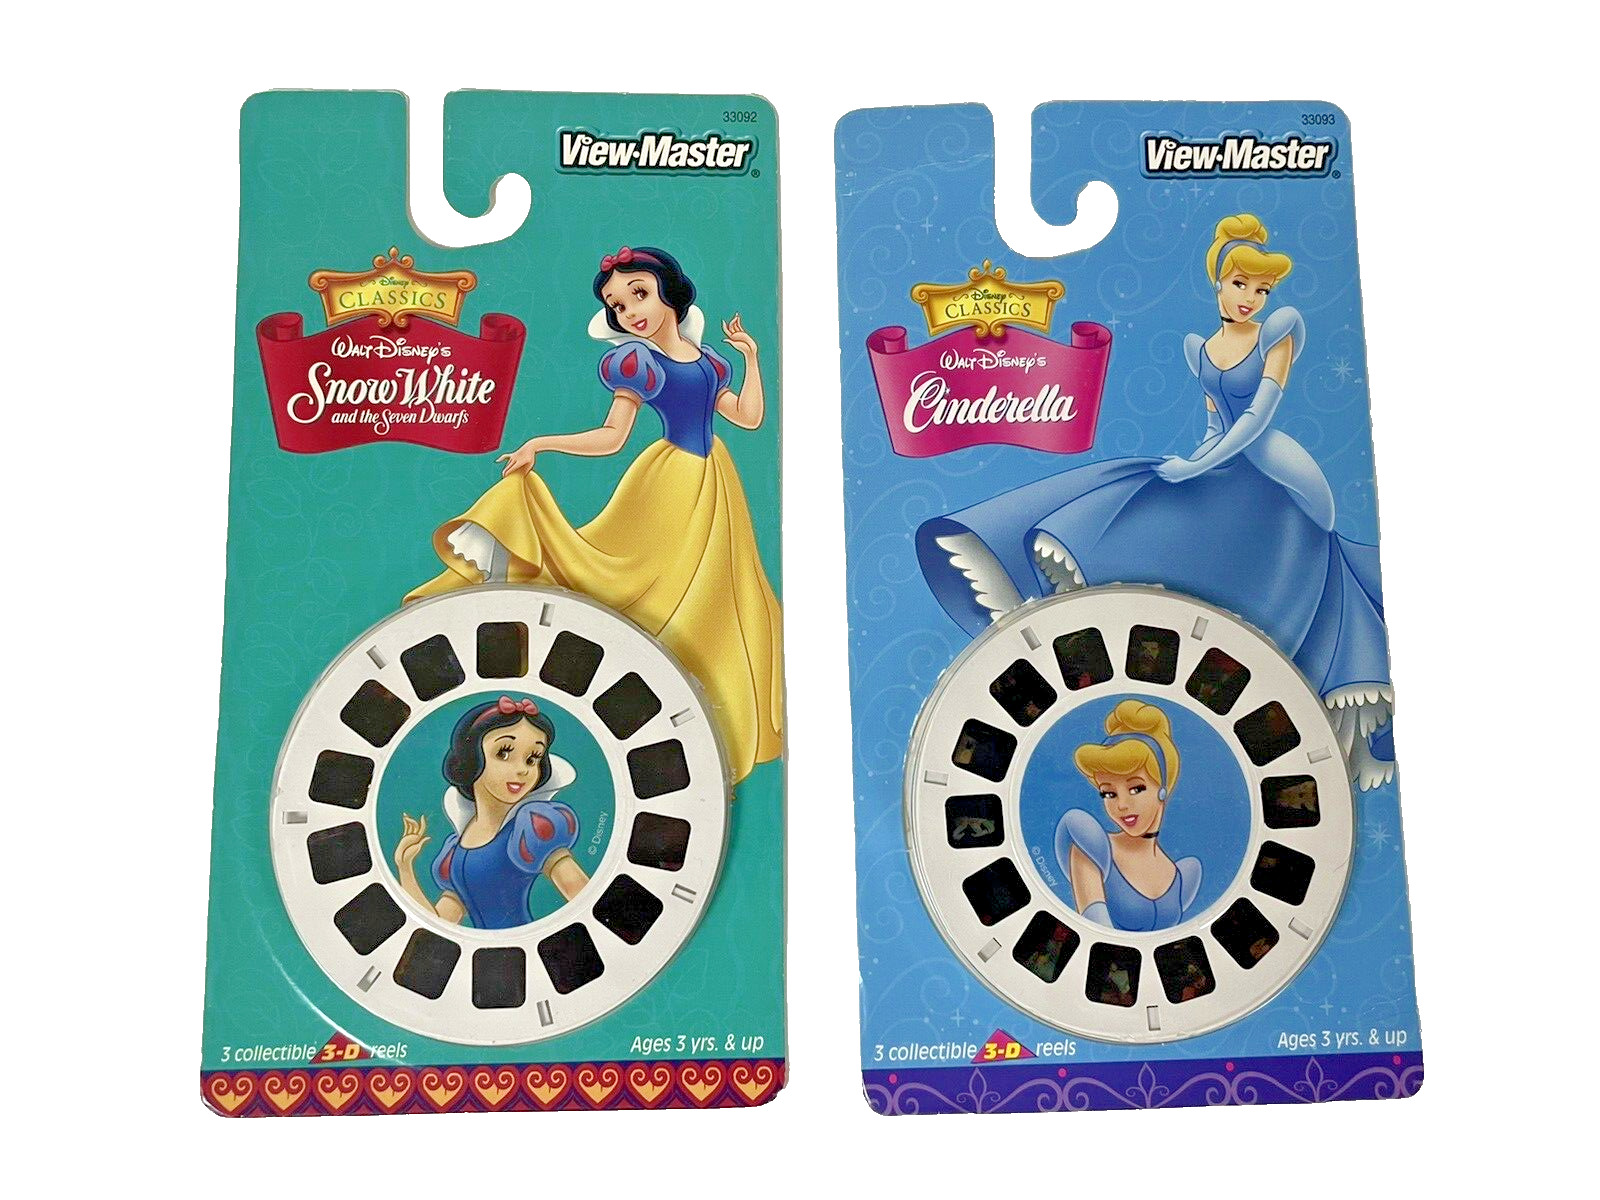 Disney Classics Mattel View-Master 1998 Cinderella #33093 Snow White #33092